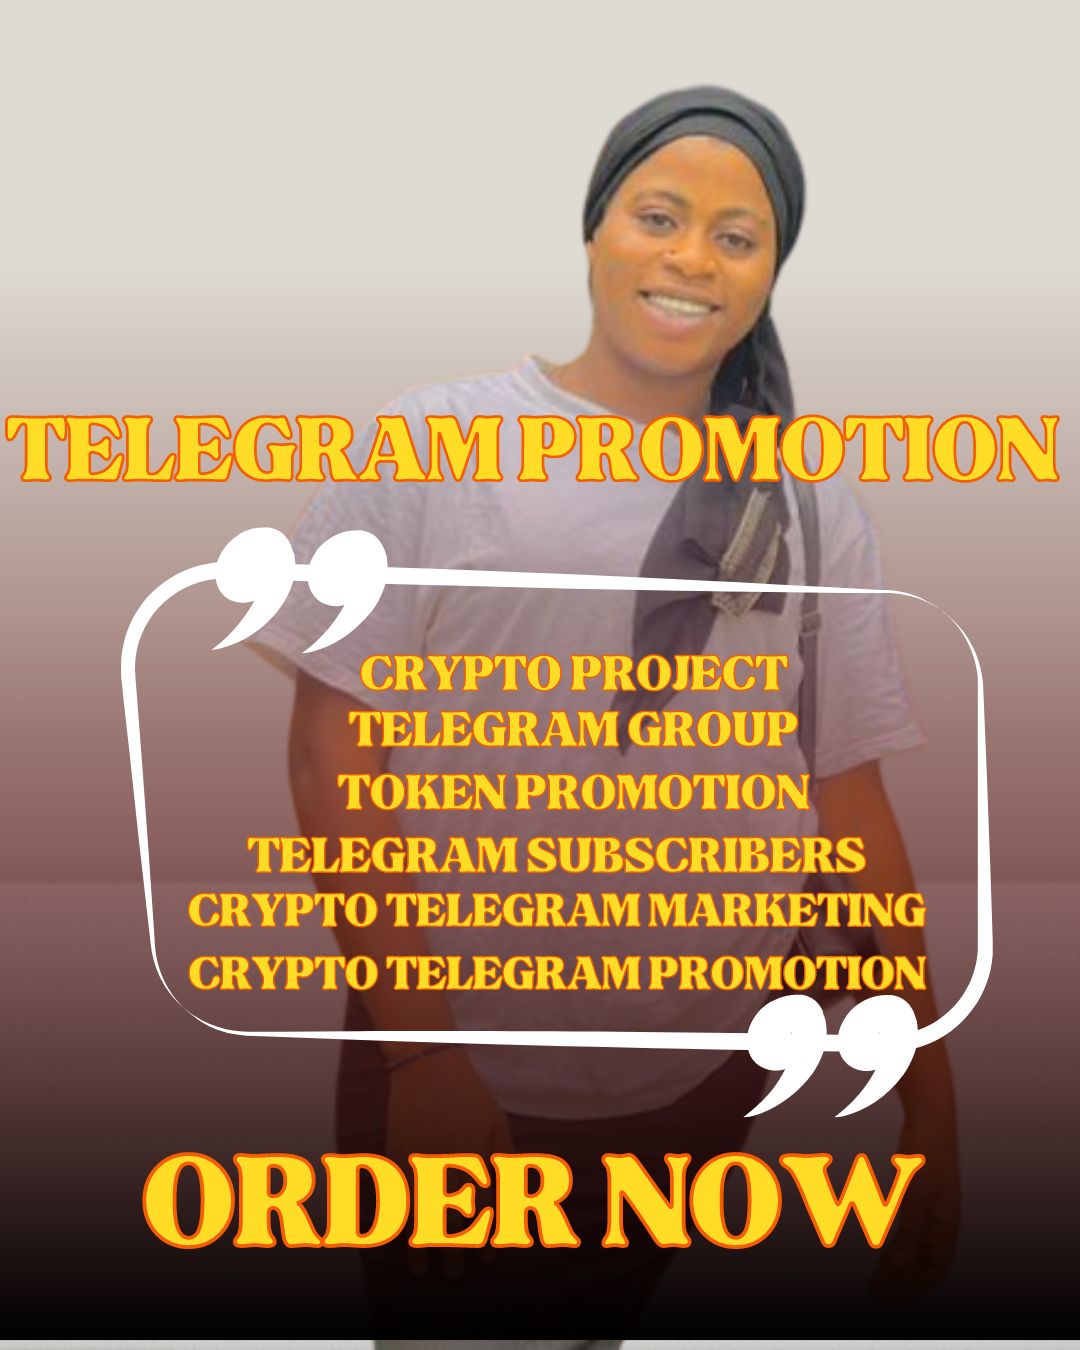 I will do crypto telegram promotion and crypto telegram marketing